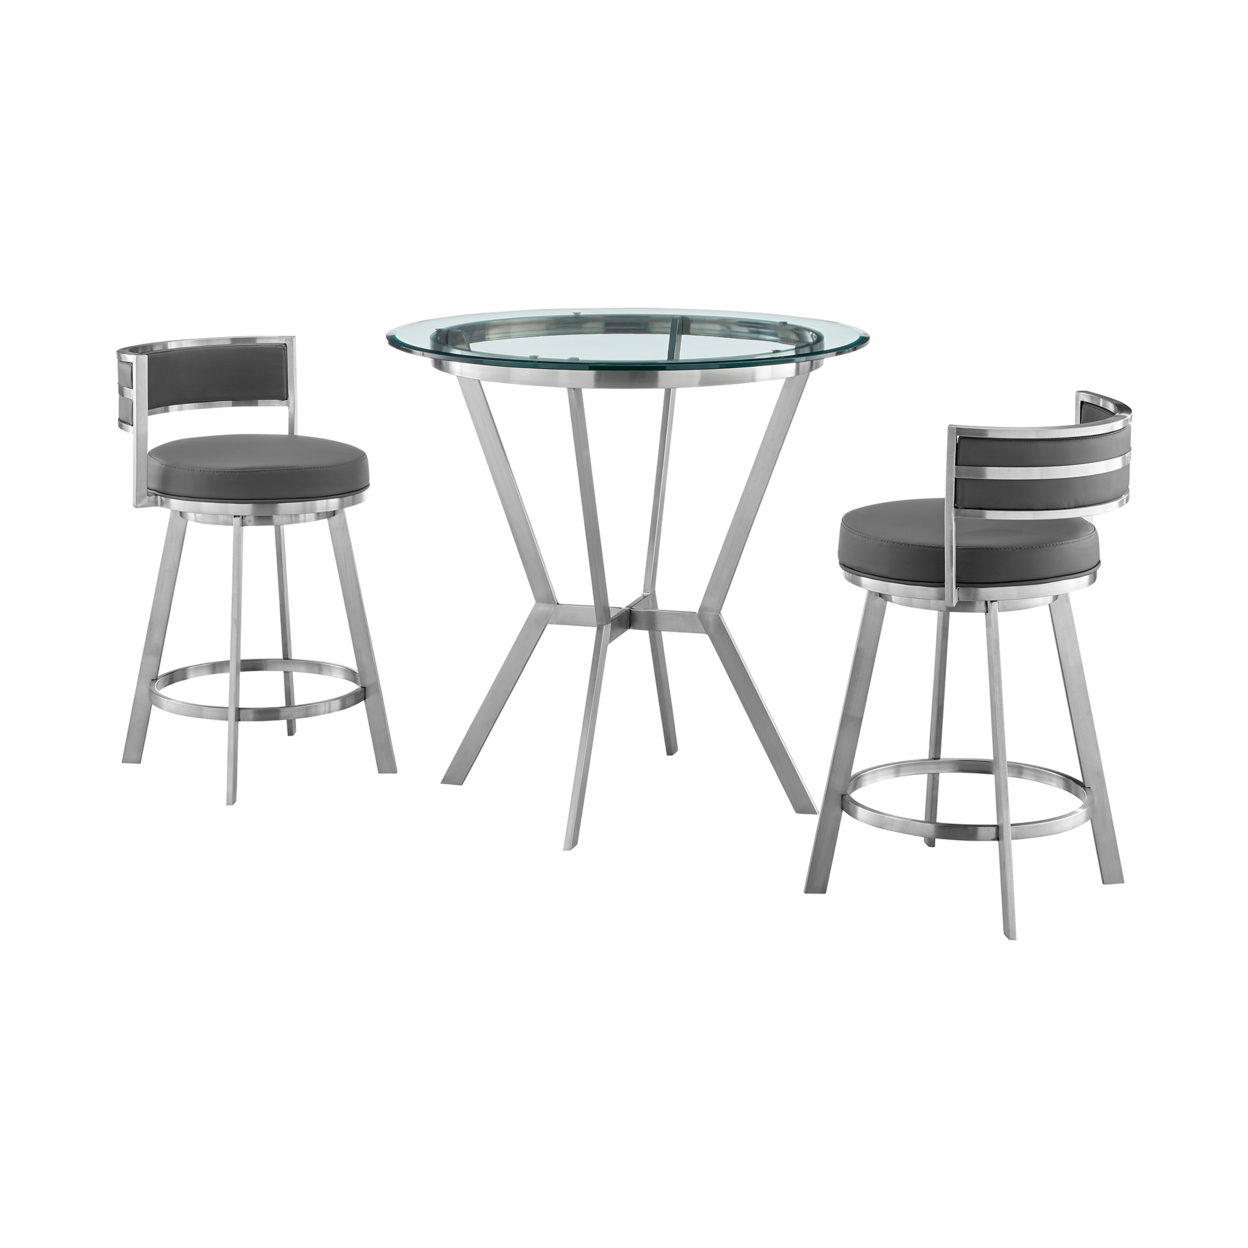 Jake 3 Piece Counter Height Dining Table Set, Round Glass Top, Gray, Chrome- Saltoro Sherpi